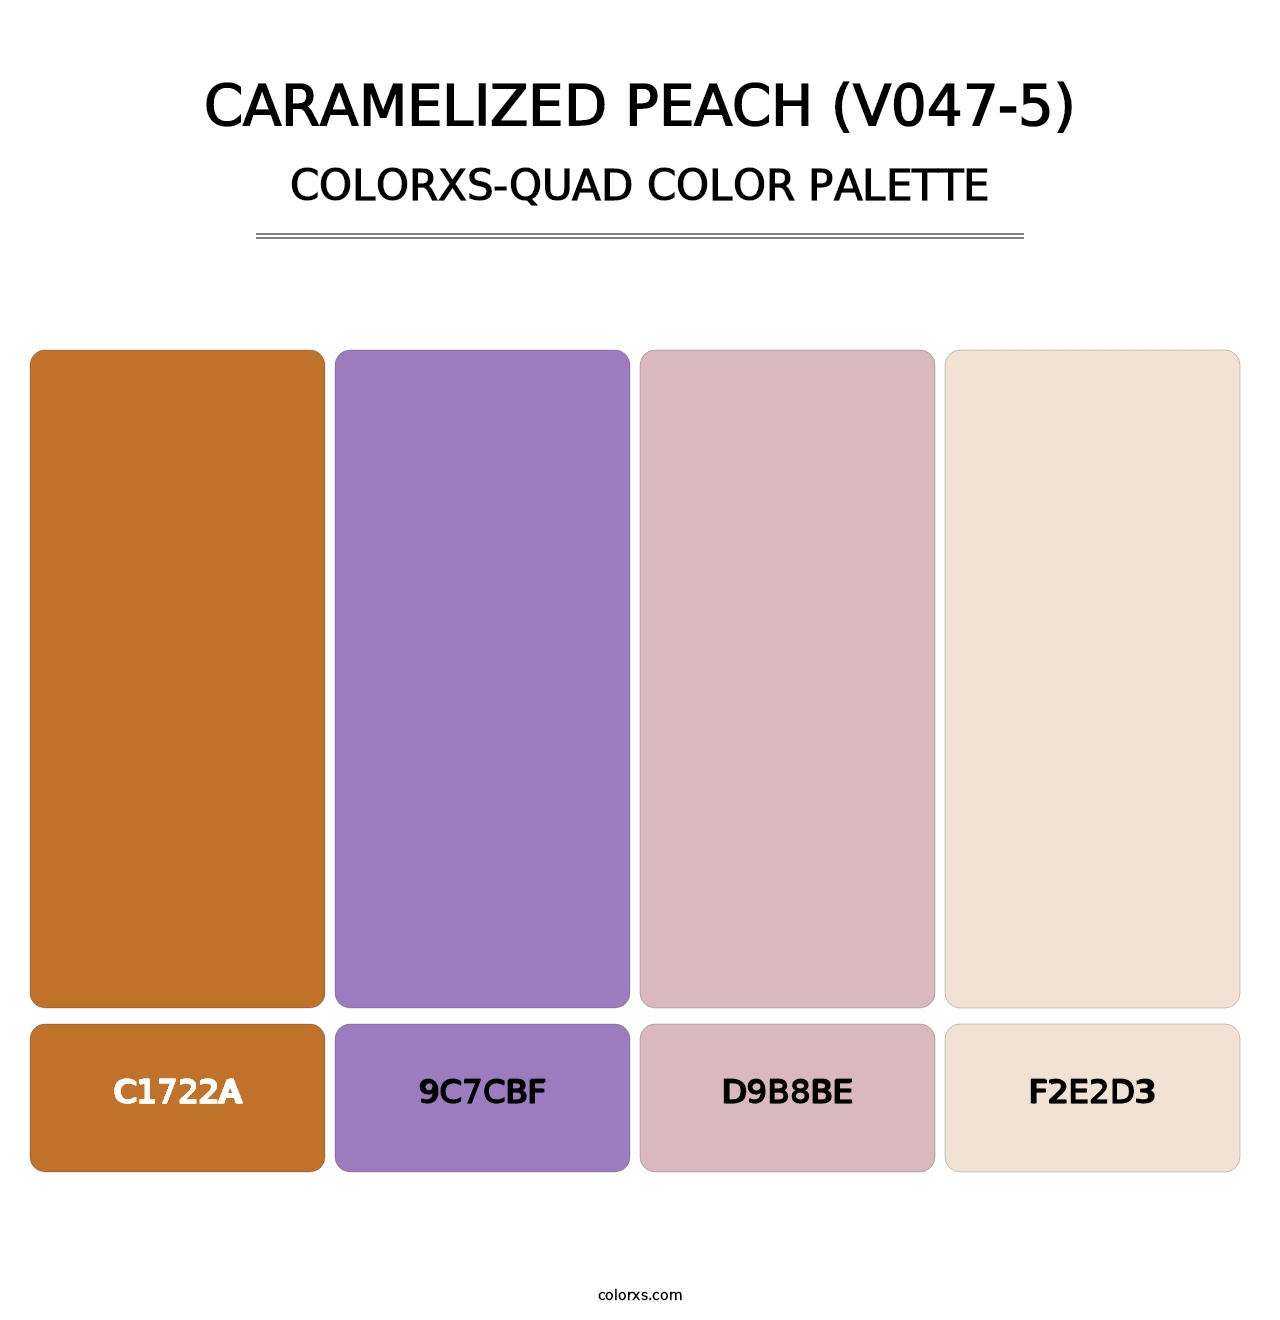 Caramelized Peach (V047-5) - Colorxs Quad Palette